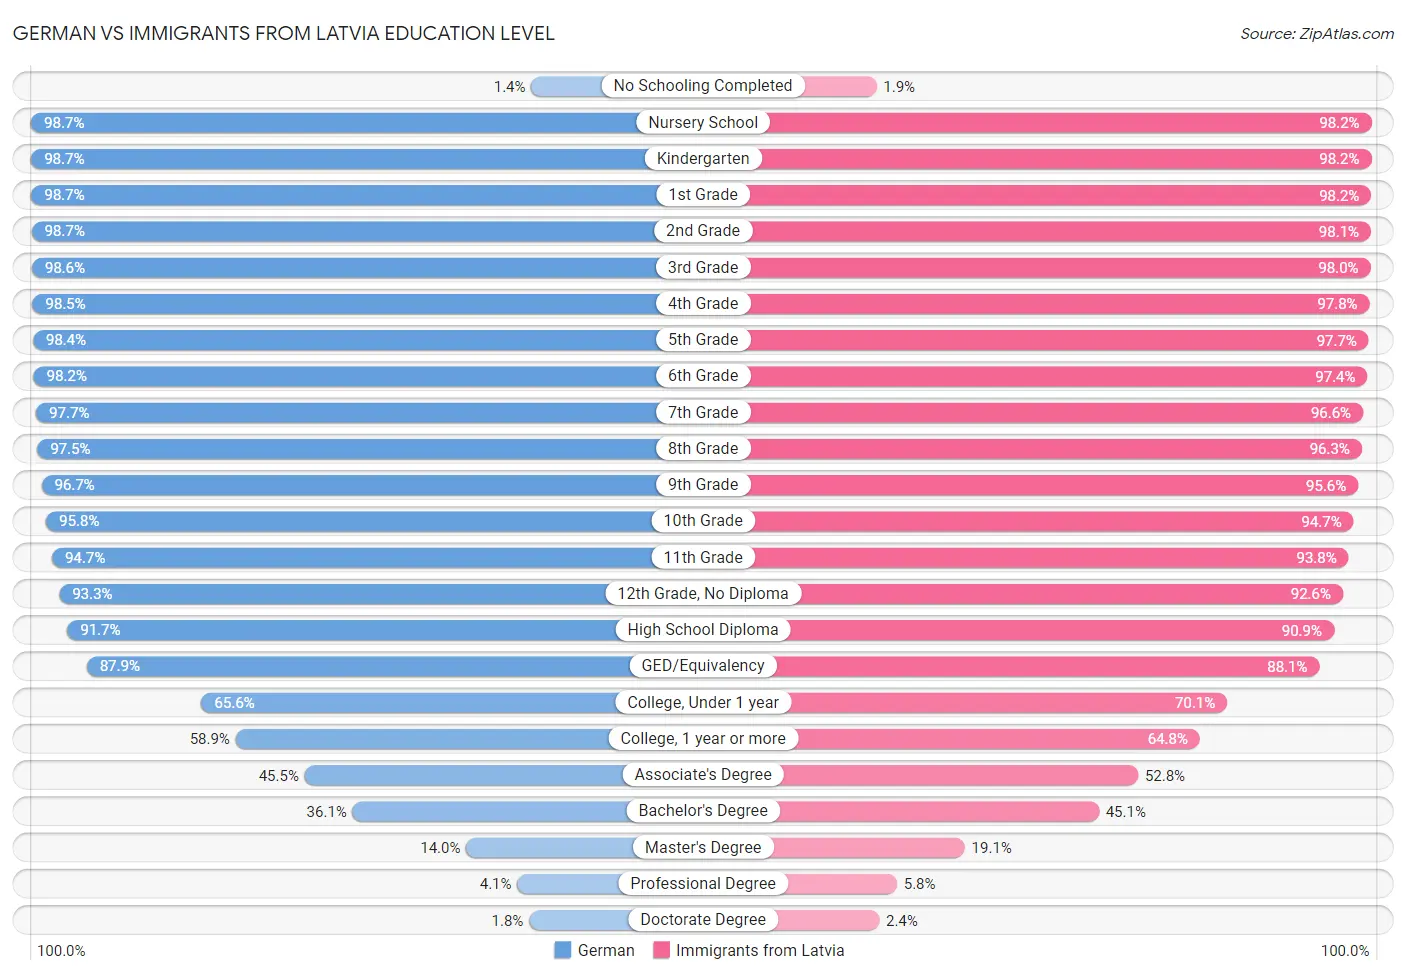 German vs Immigrants from Latvia Education Level